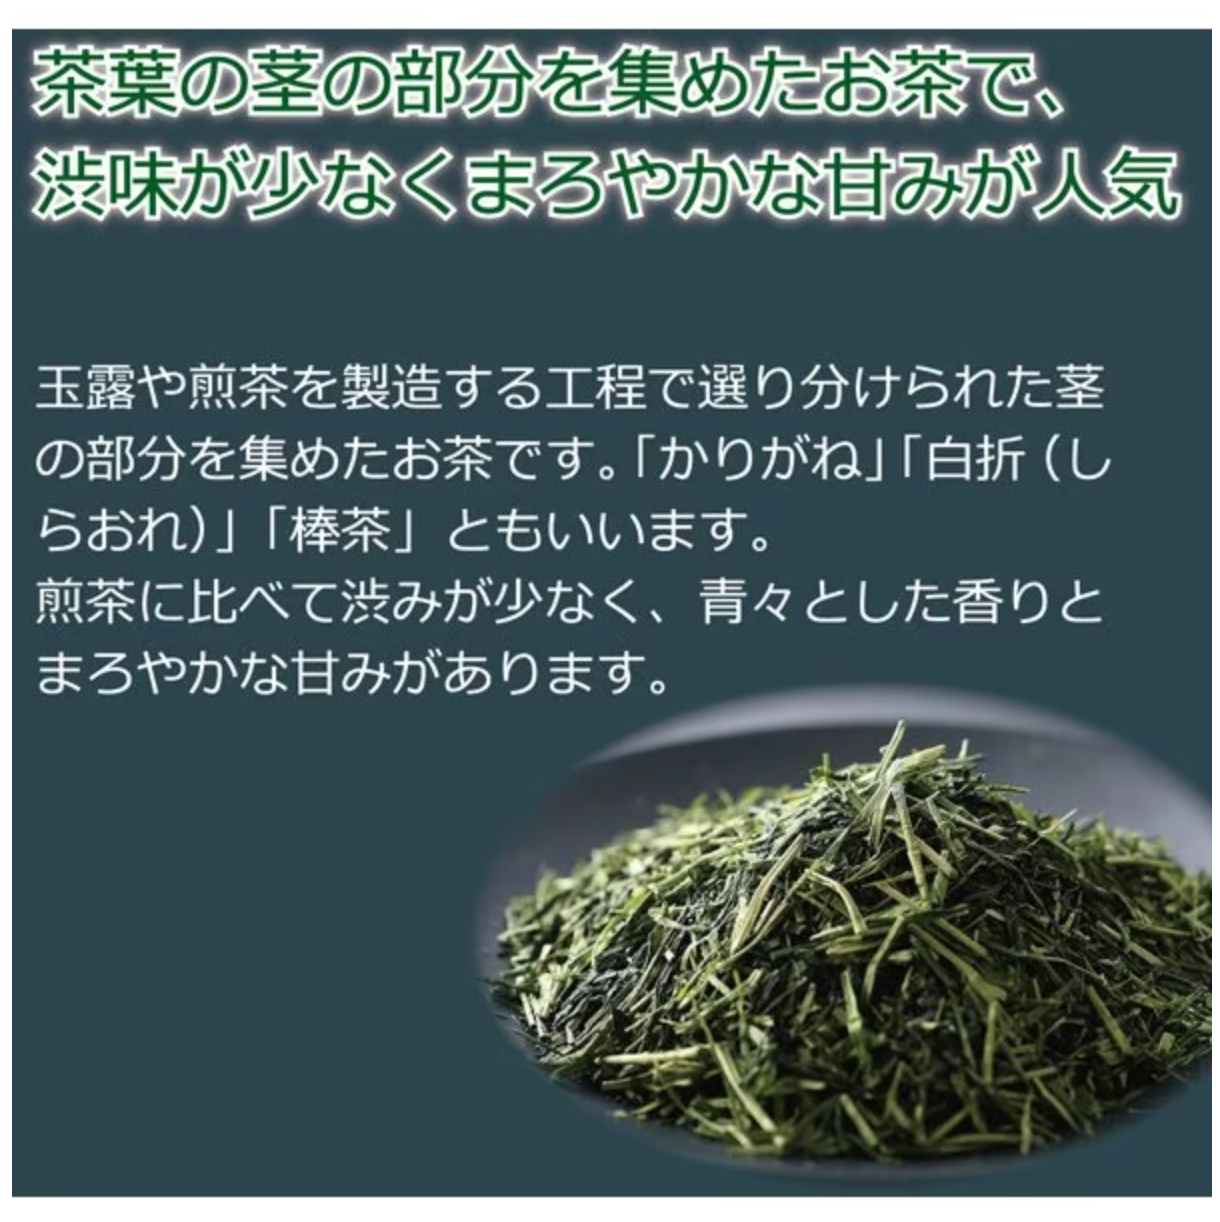 Chikiriya Uji Tea Karigane Shirasagi 100g